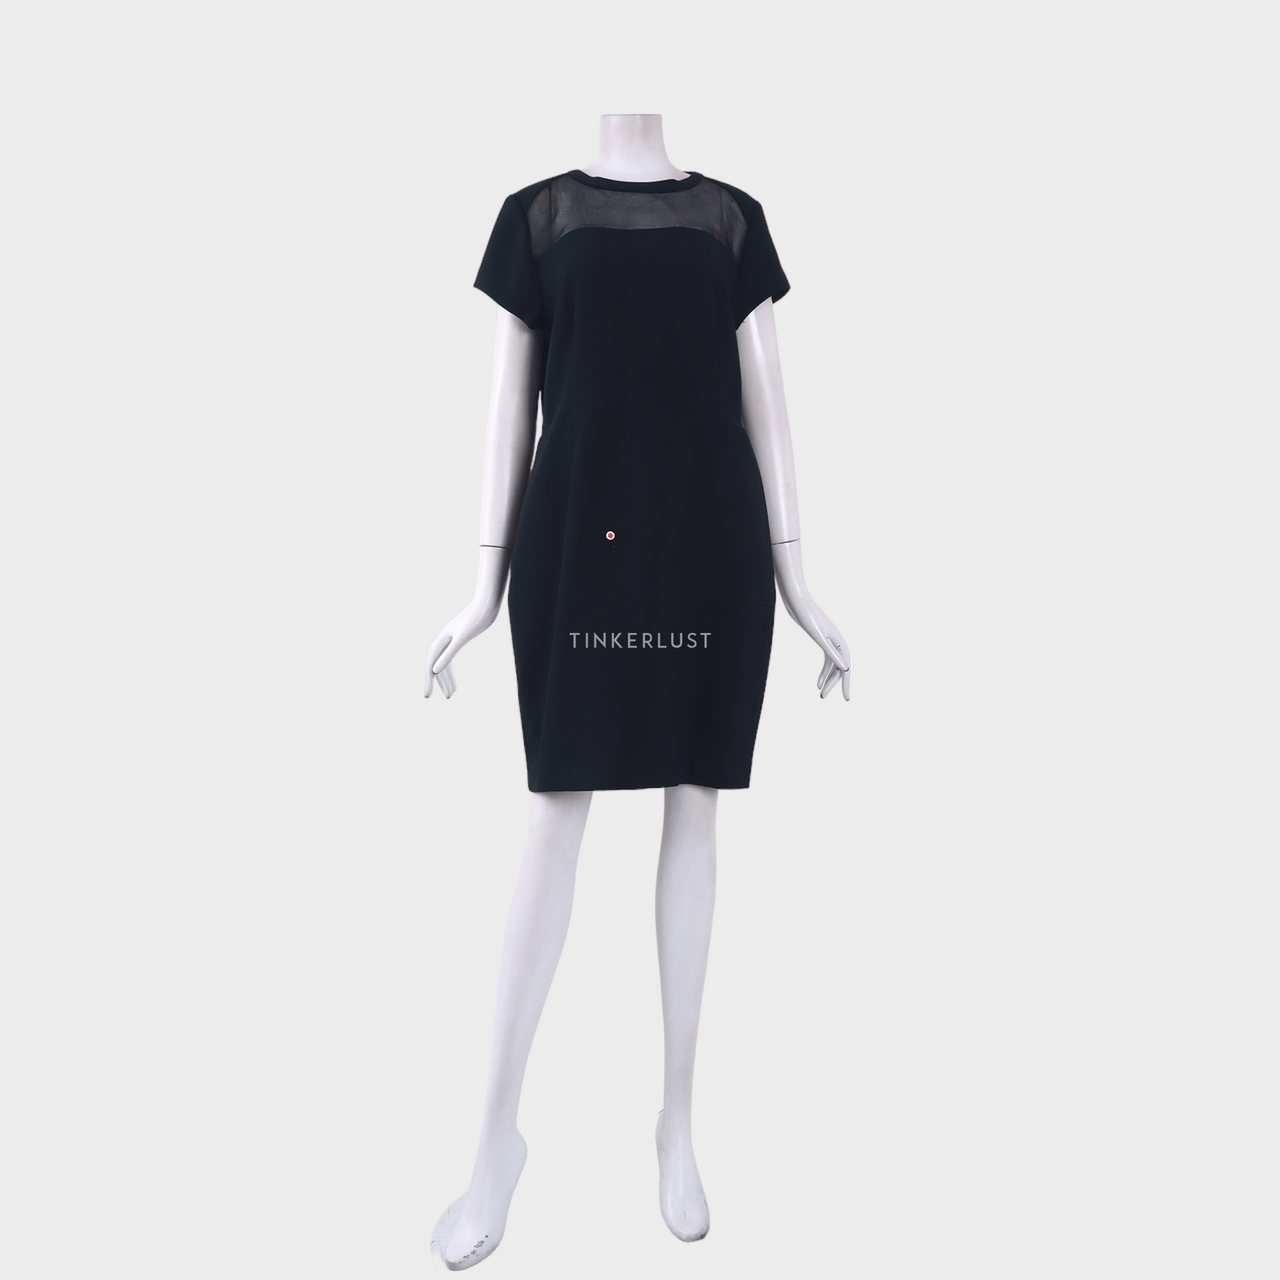 Nine West Black Mini Dress